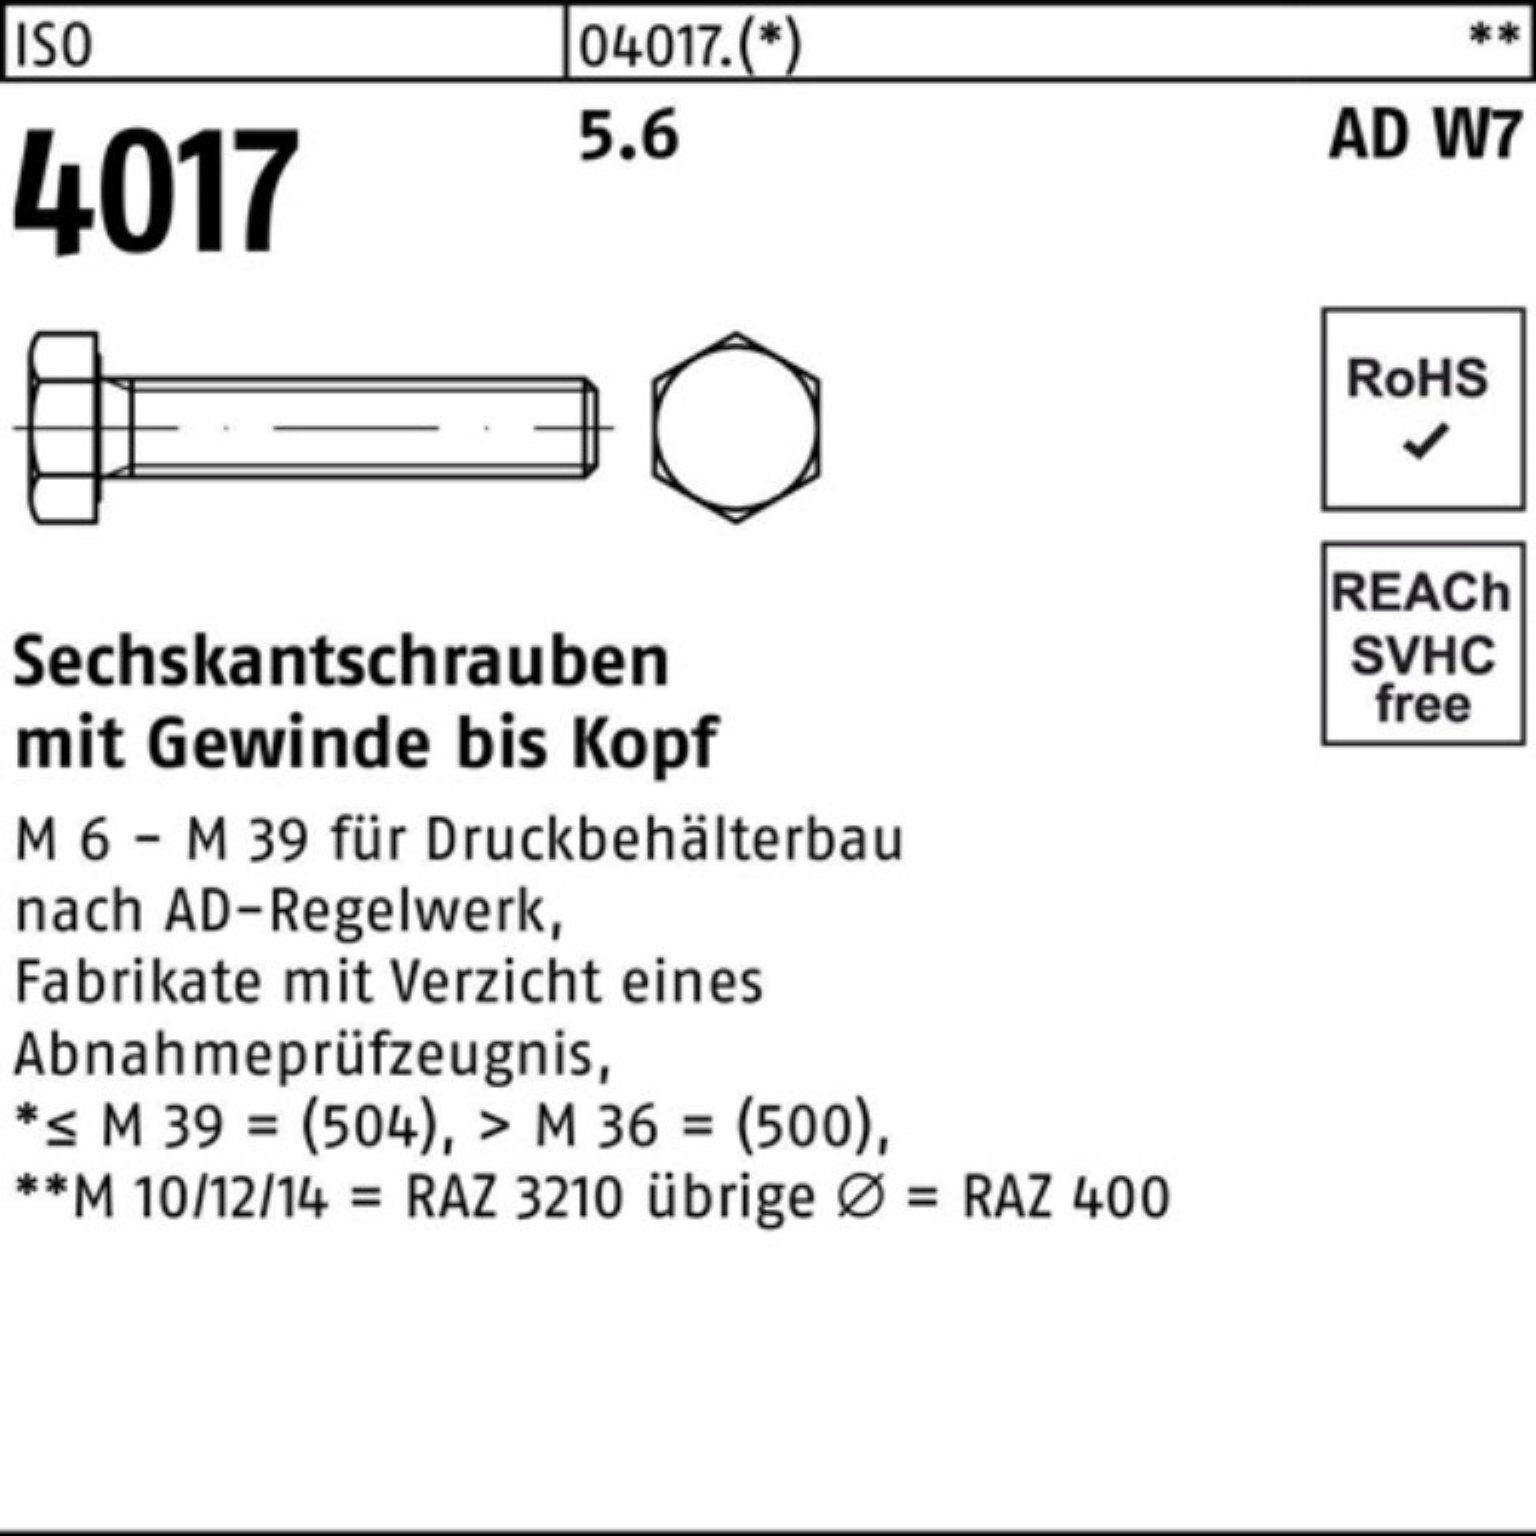 Sechskantschraube Stück W7 Pack ISO Sechskantschraube M12x 100er AD 5.6 80 50 VG I Bufab 4017